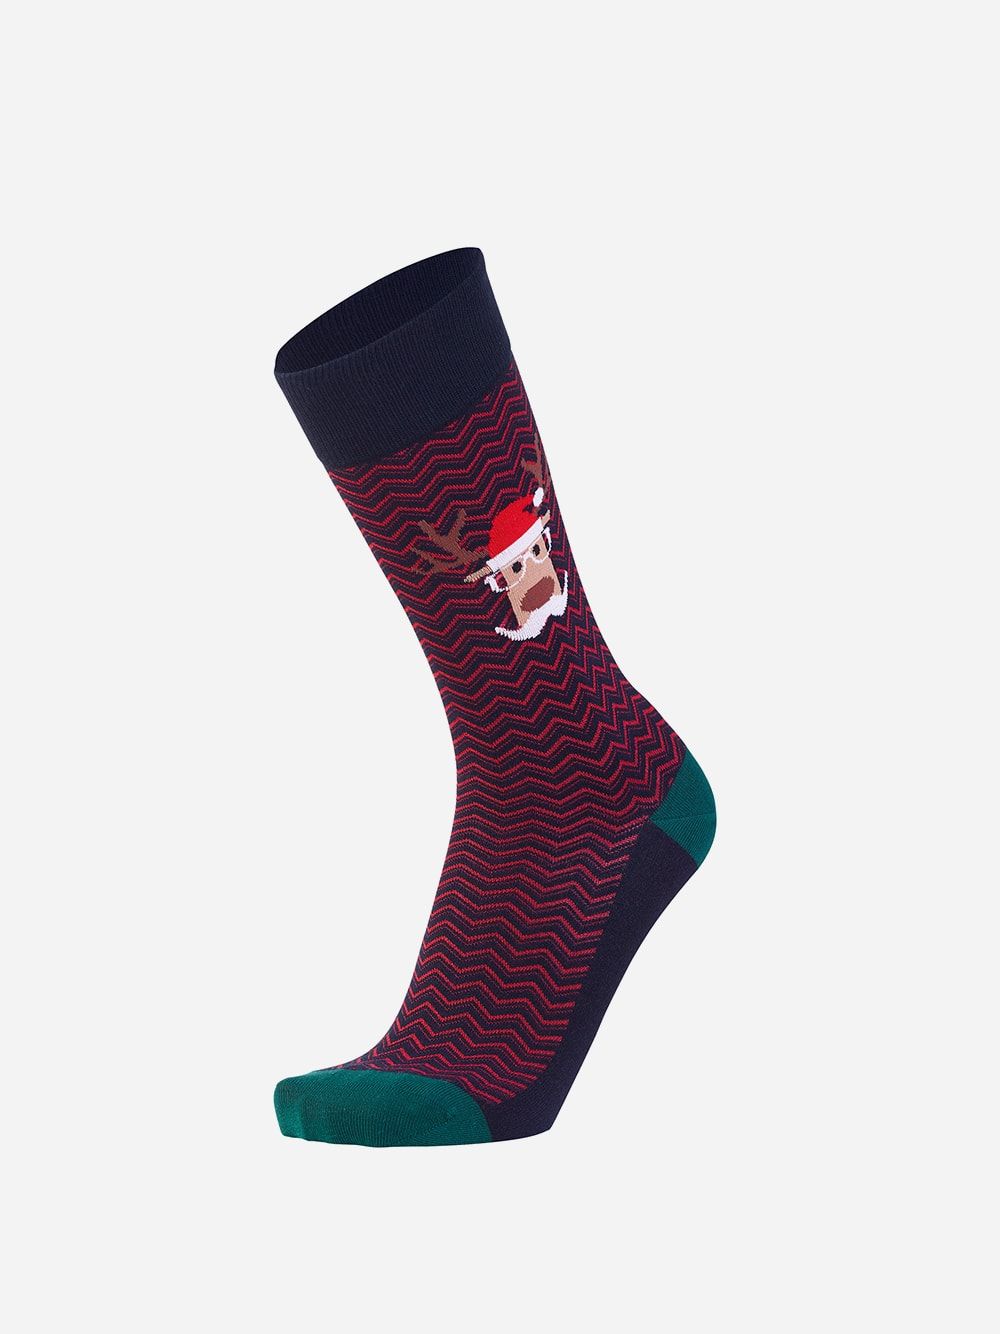 Red Socks Christmas Edition | Westmister